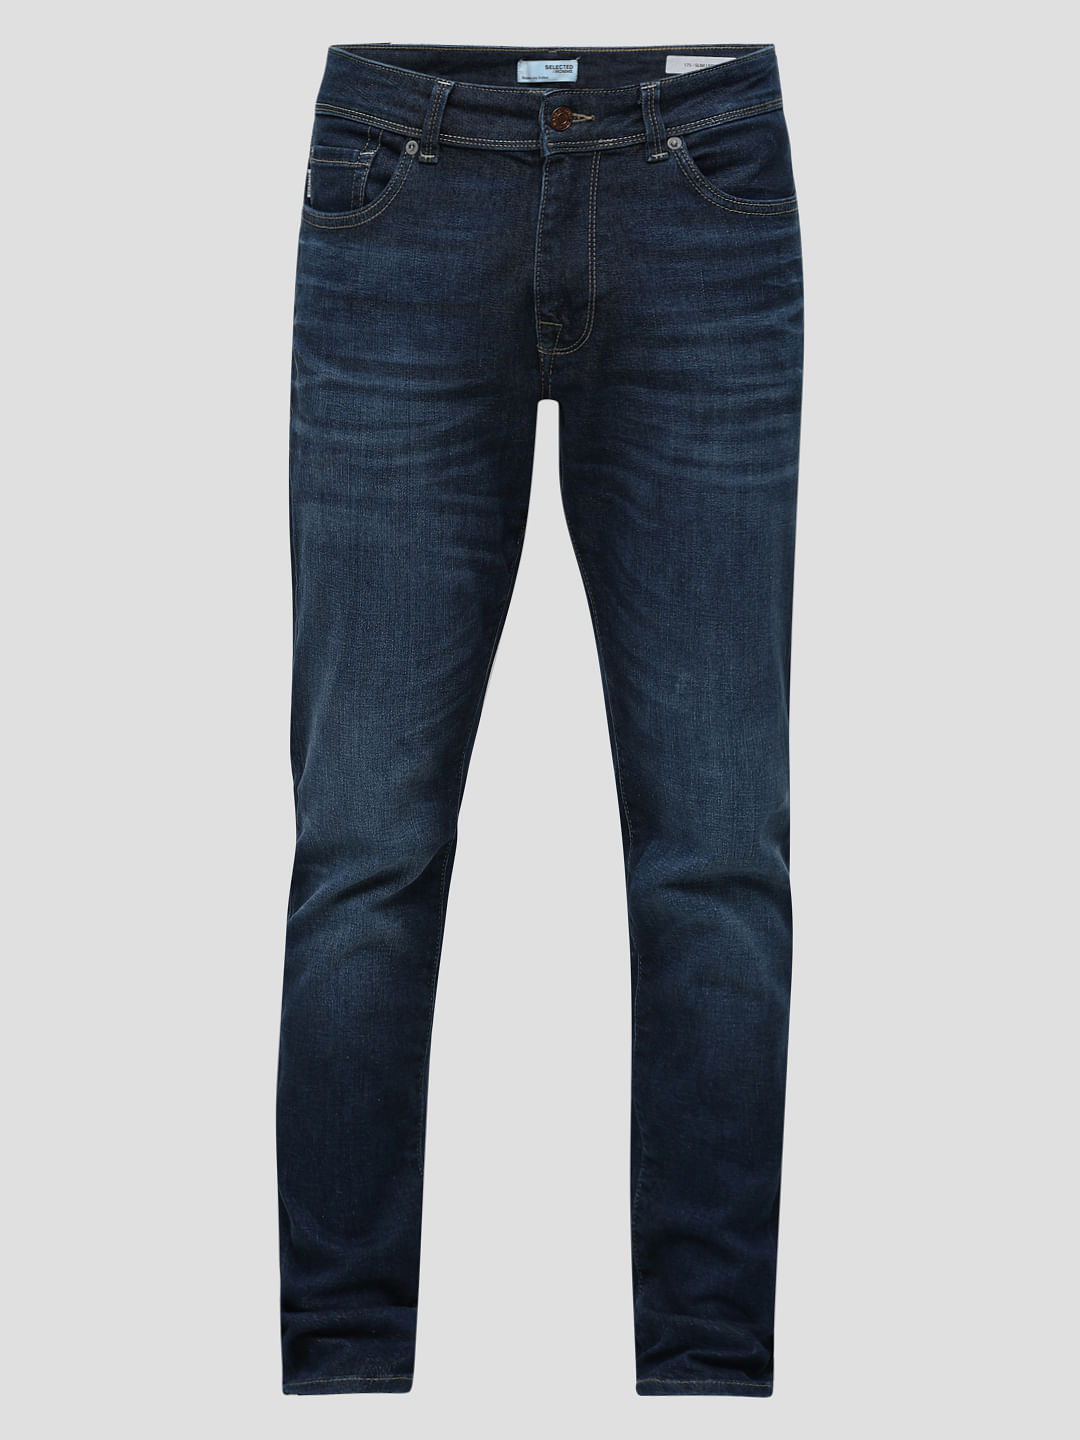 BULYA Men's Denim Relaxed Fit Dark Indigo, Add 1 Jeans To Cart & Get 1 Item  Free. – Bulya